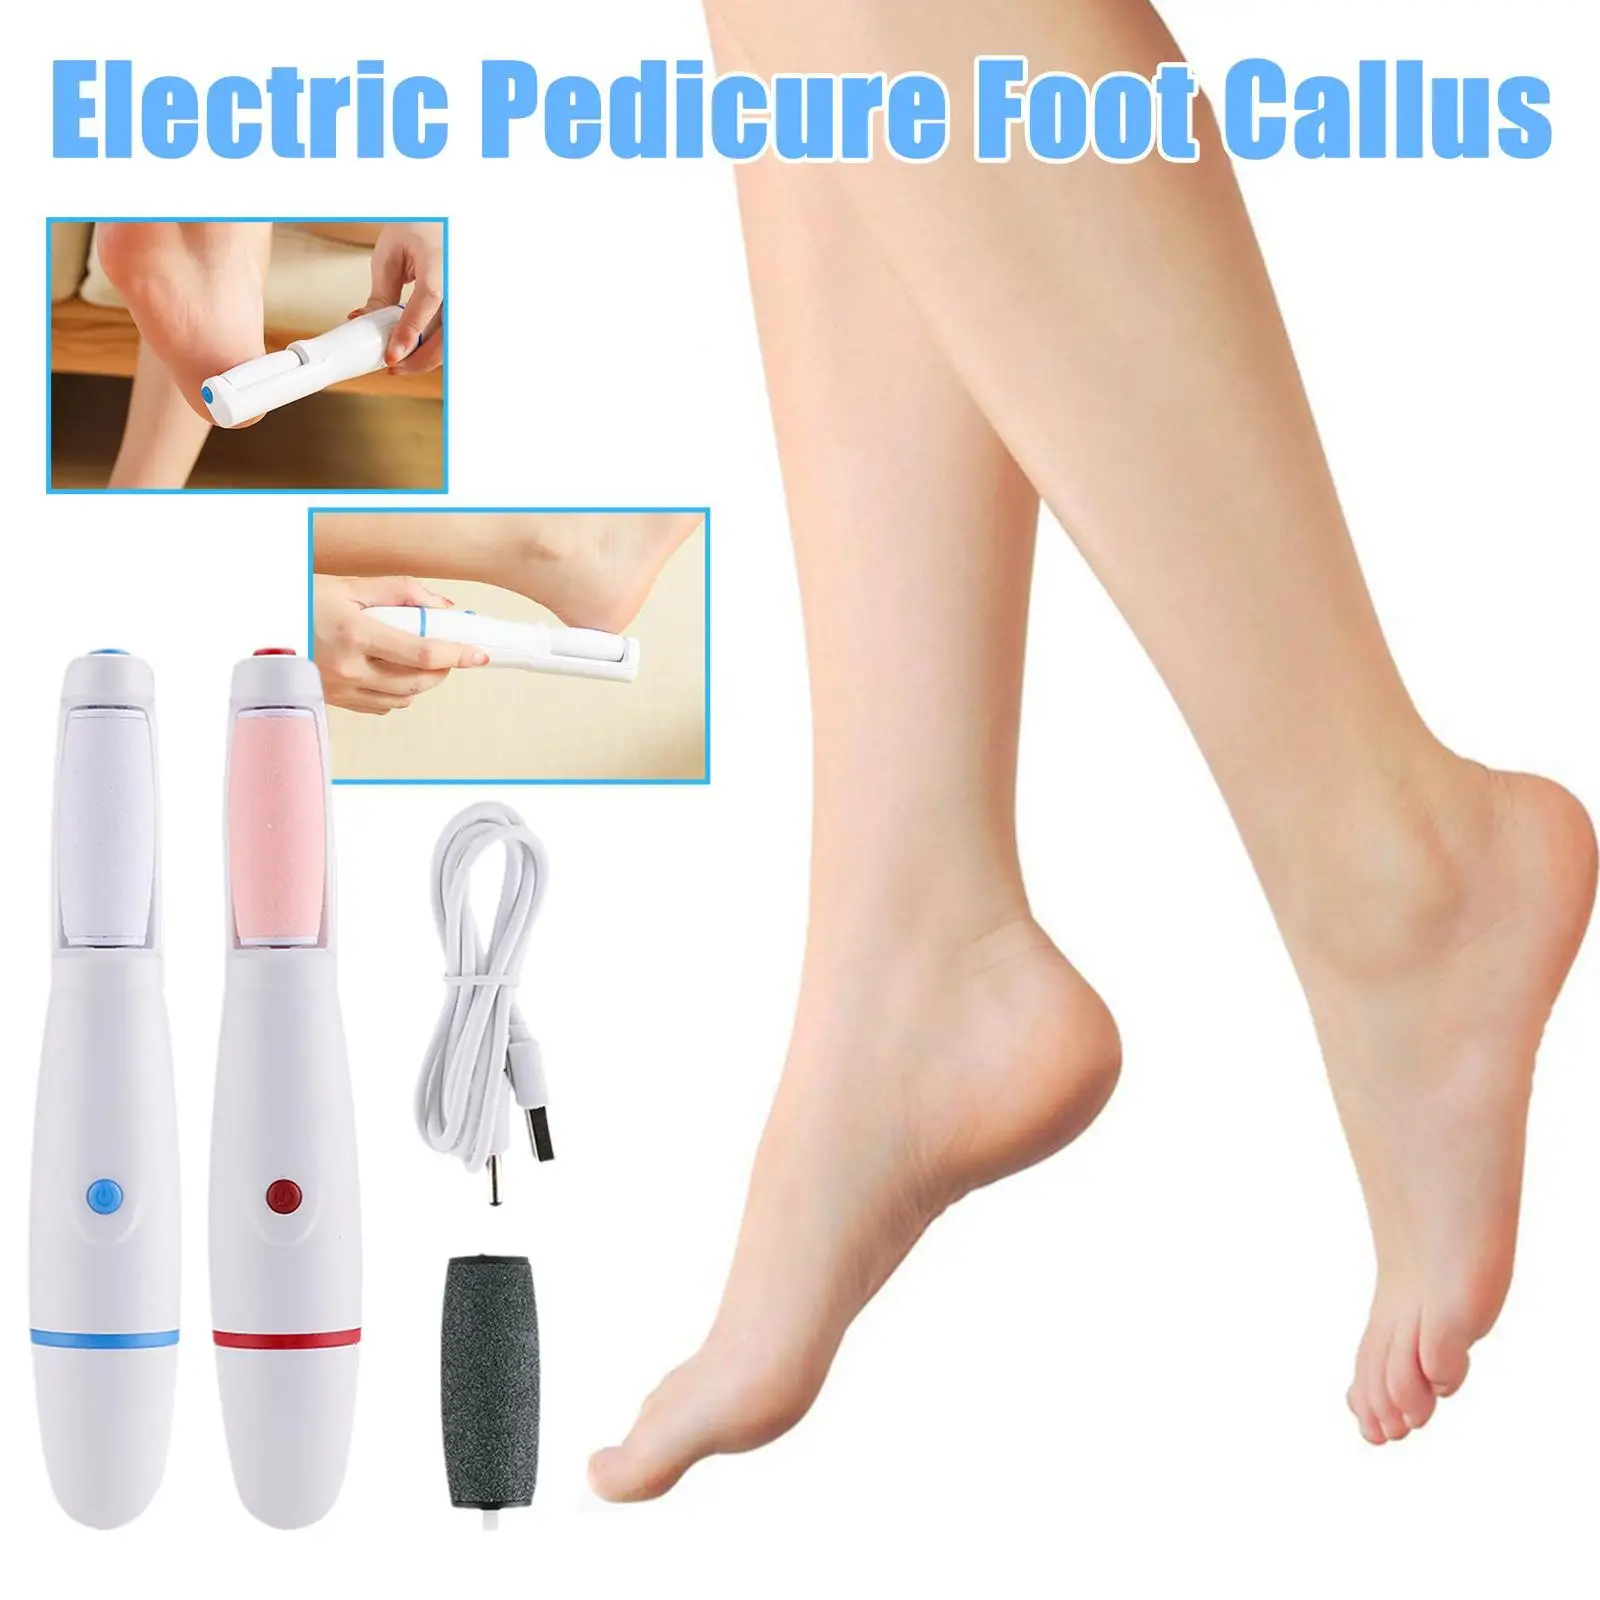 

Electric Foot File Scraper Callus Remover Feet Professional Dead Skin Foot Pedicure Rechargeable Foot Care Tool Remover Callus